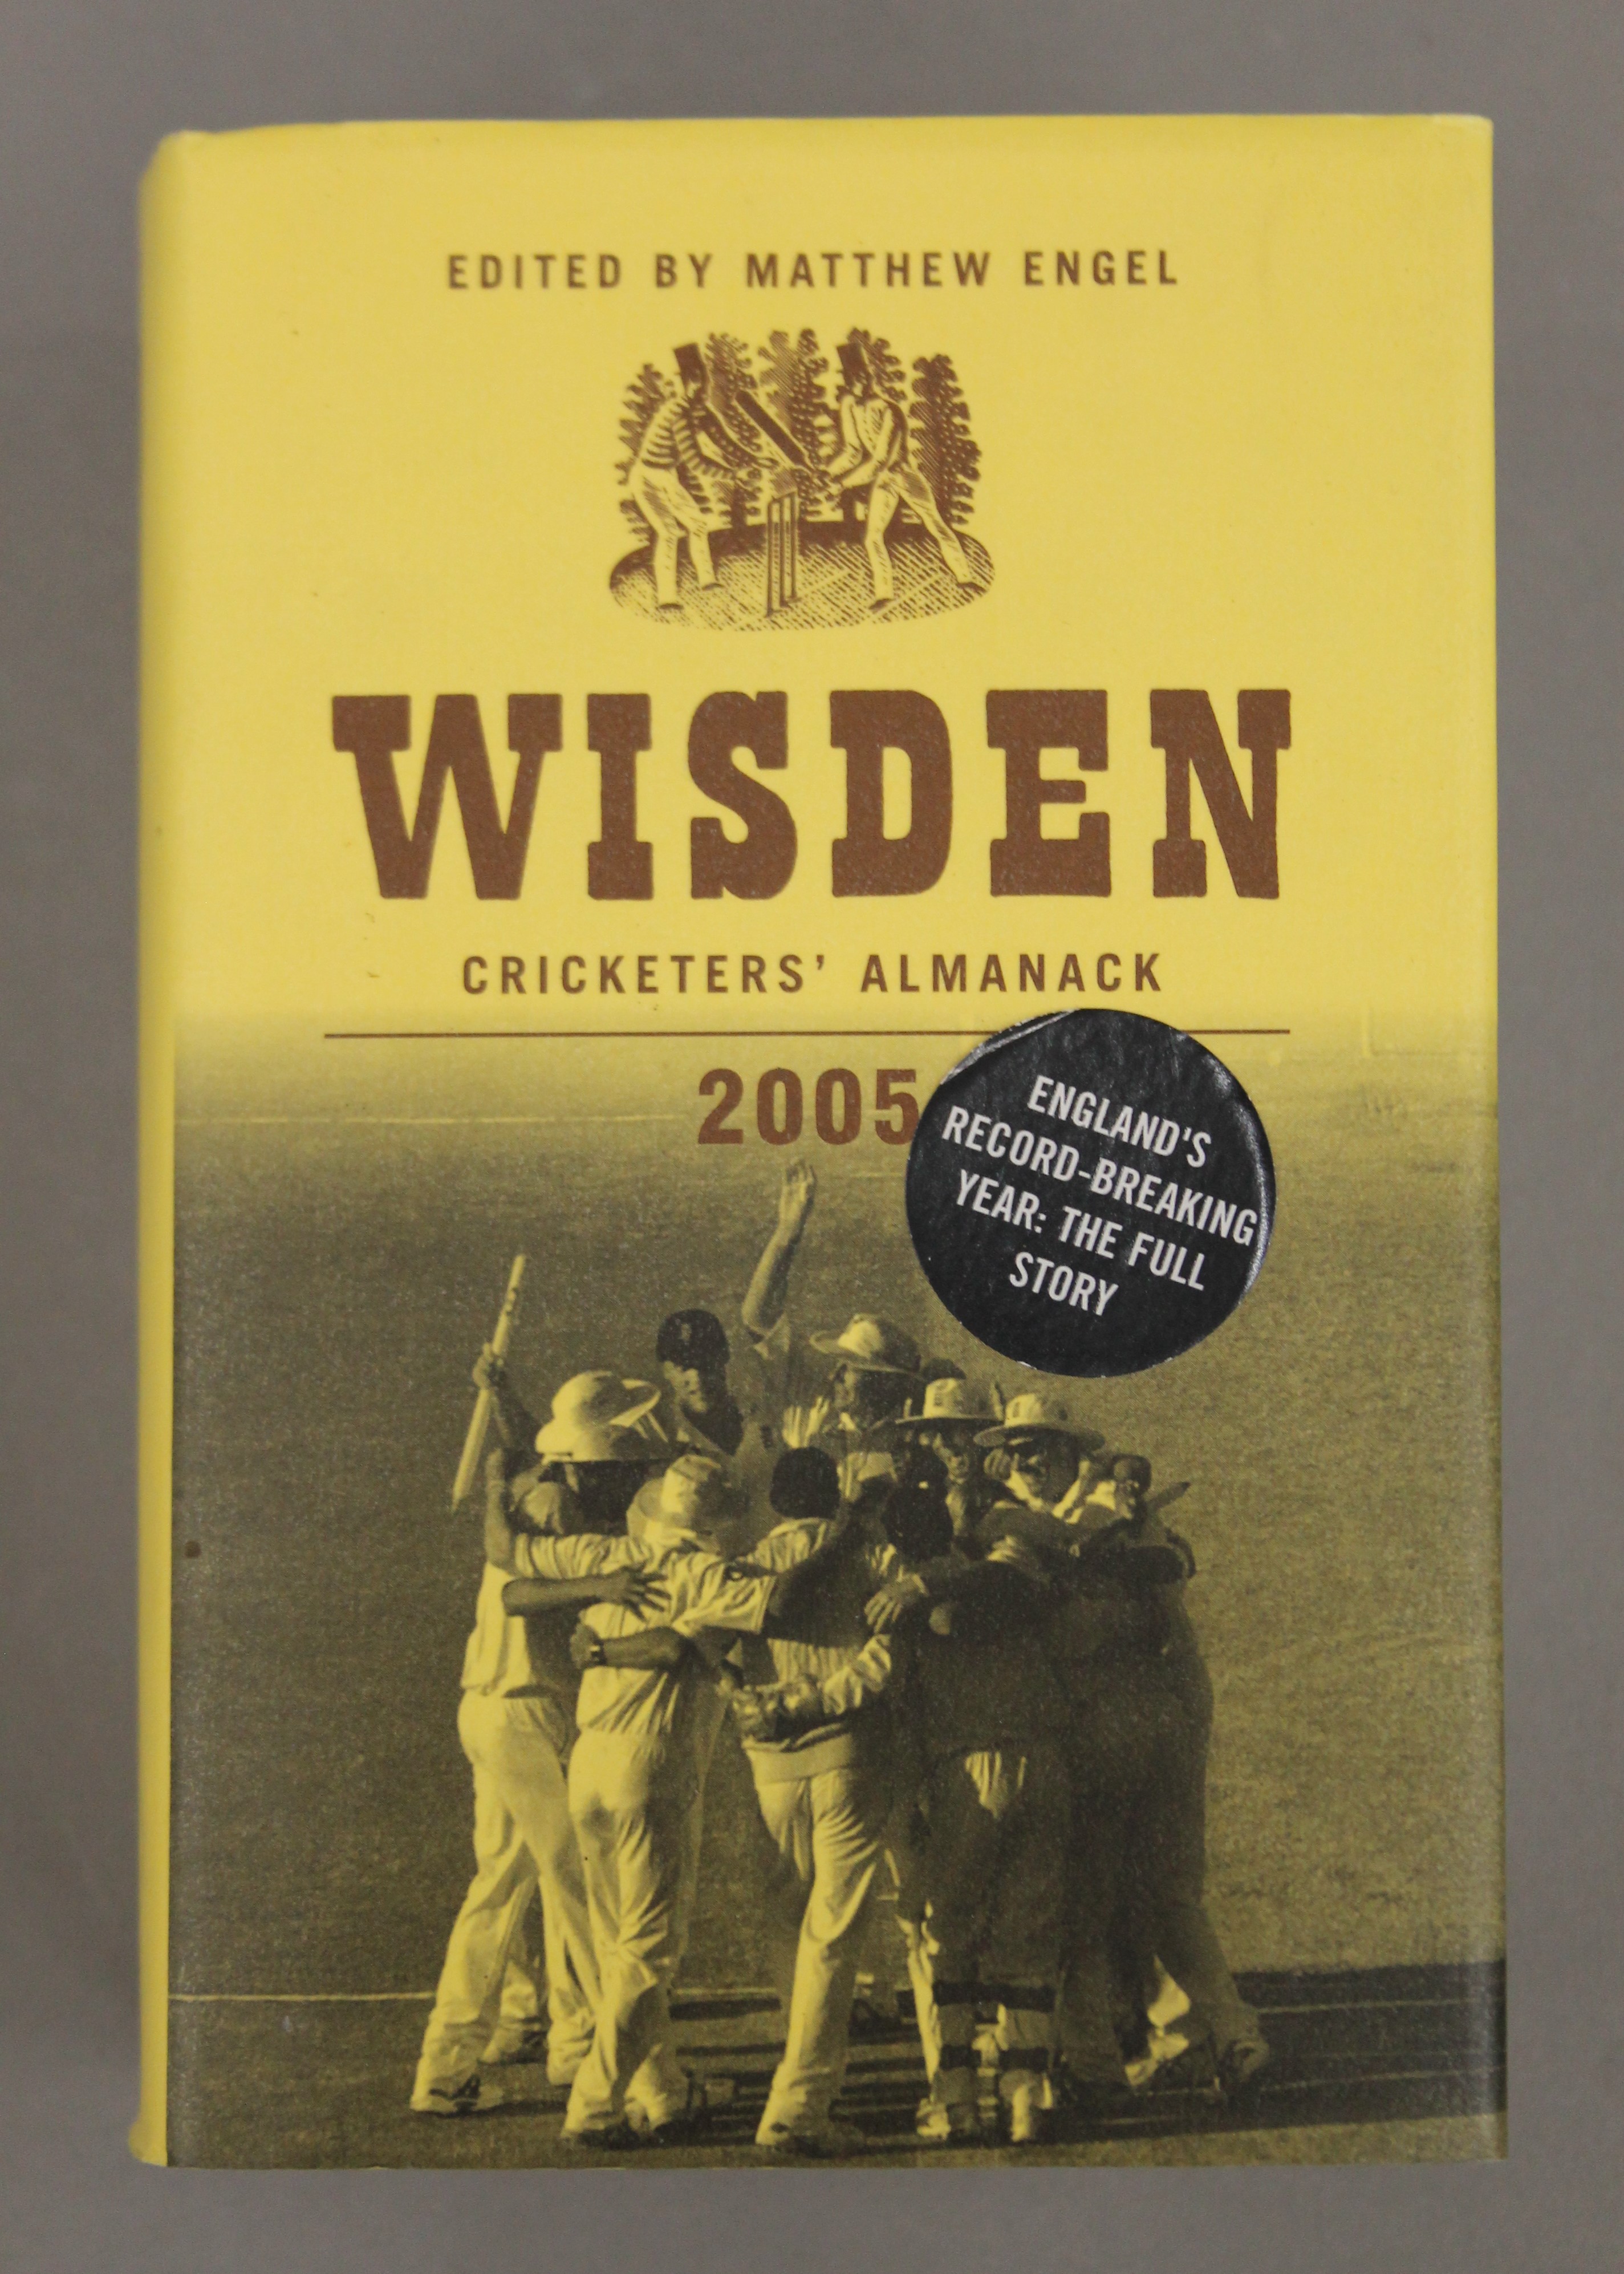 A quantity of Wisden Cricketers' Almanacks. - Image 4 of 4